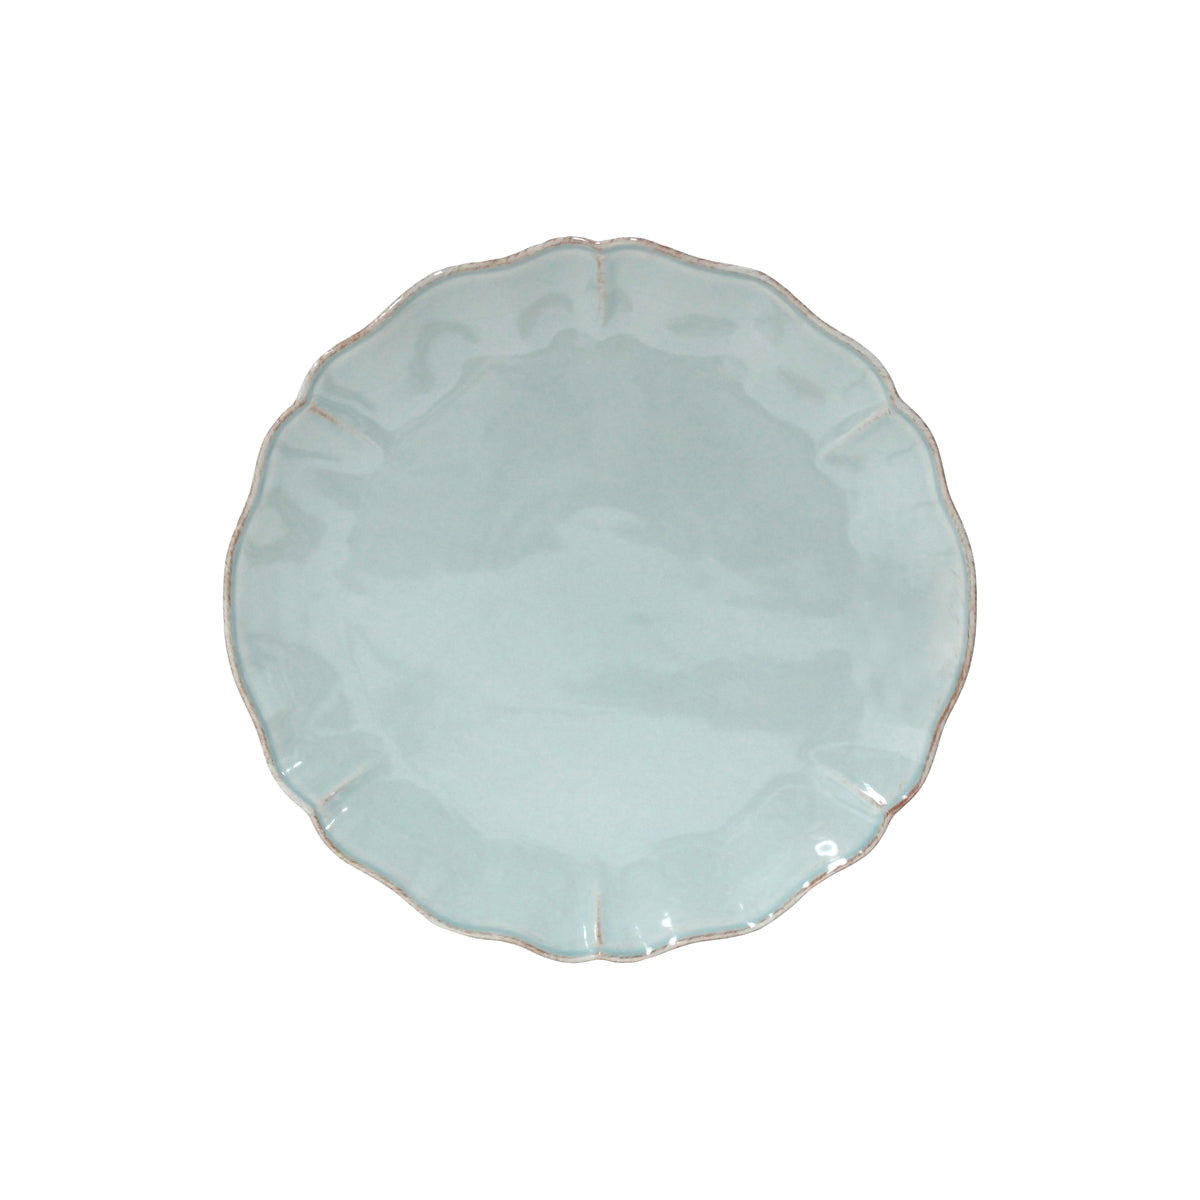 300050 Costa Nova Alentejo Turquoise Round Platter 340mm Tomkin Australia Hospitality Supplies